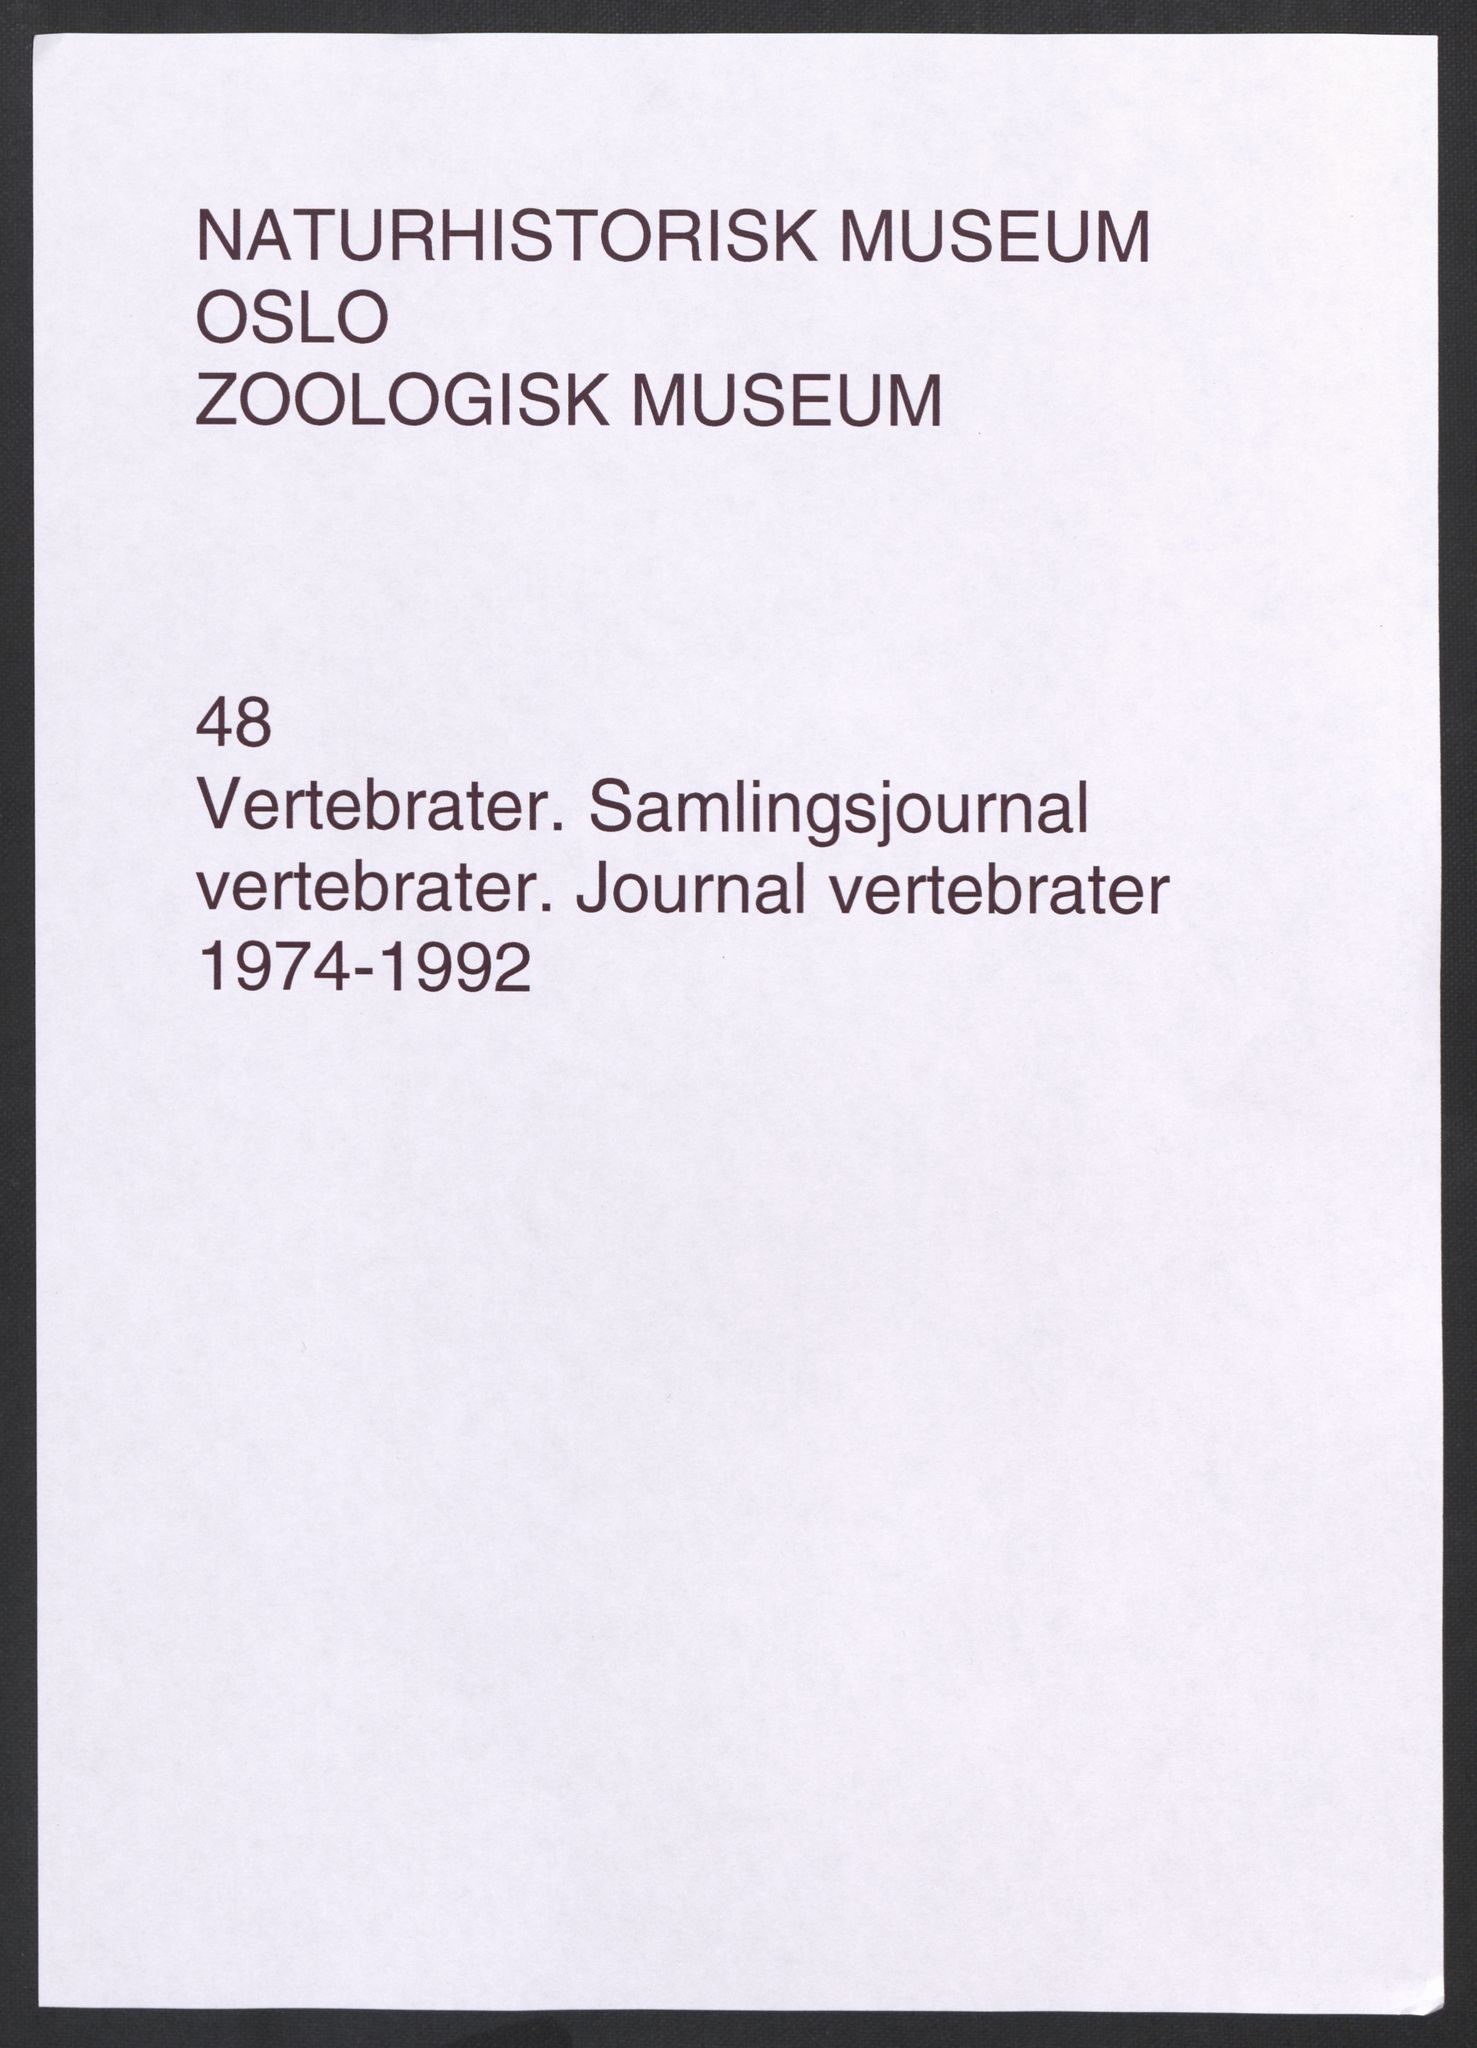 Naturhistorisk museum (Oslo), NHMO/-/5, 1974-1992